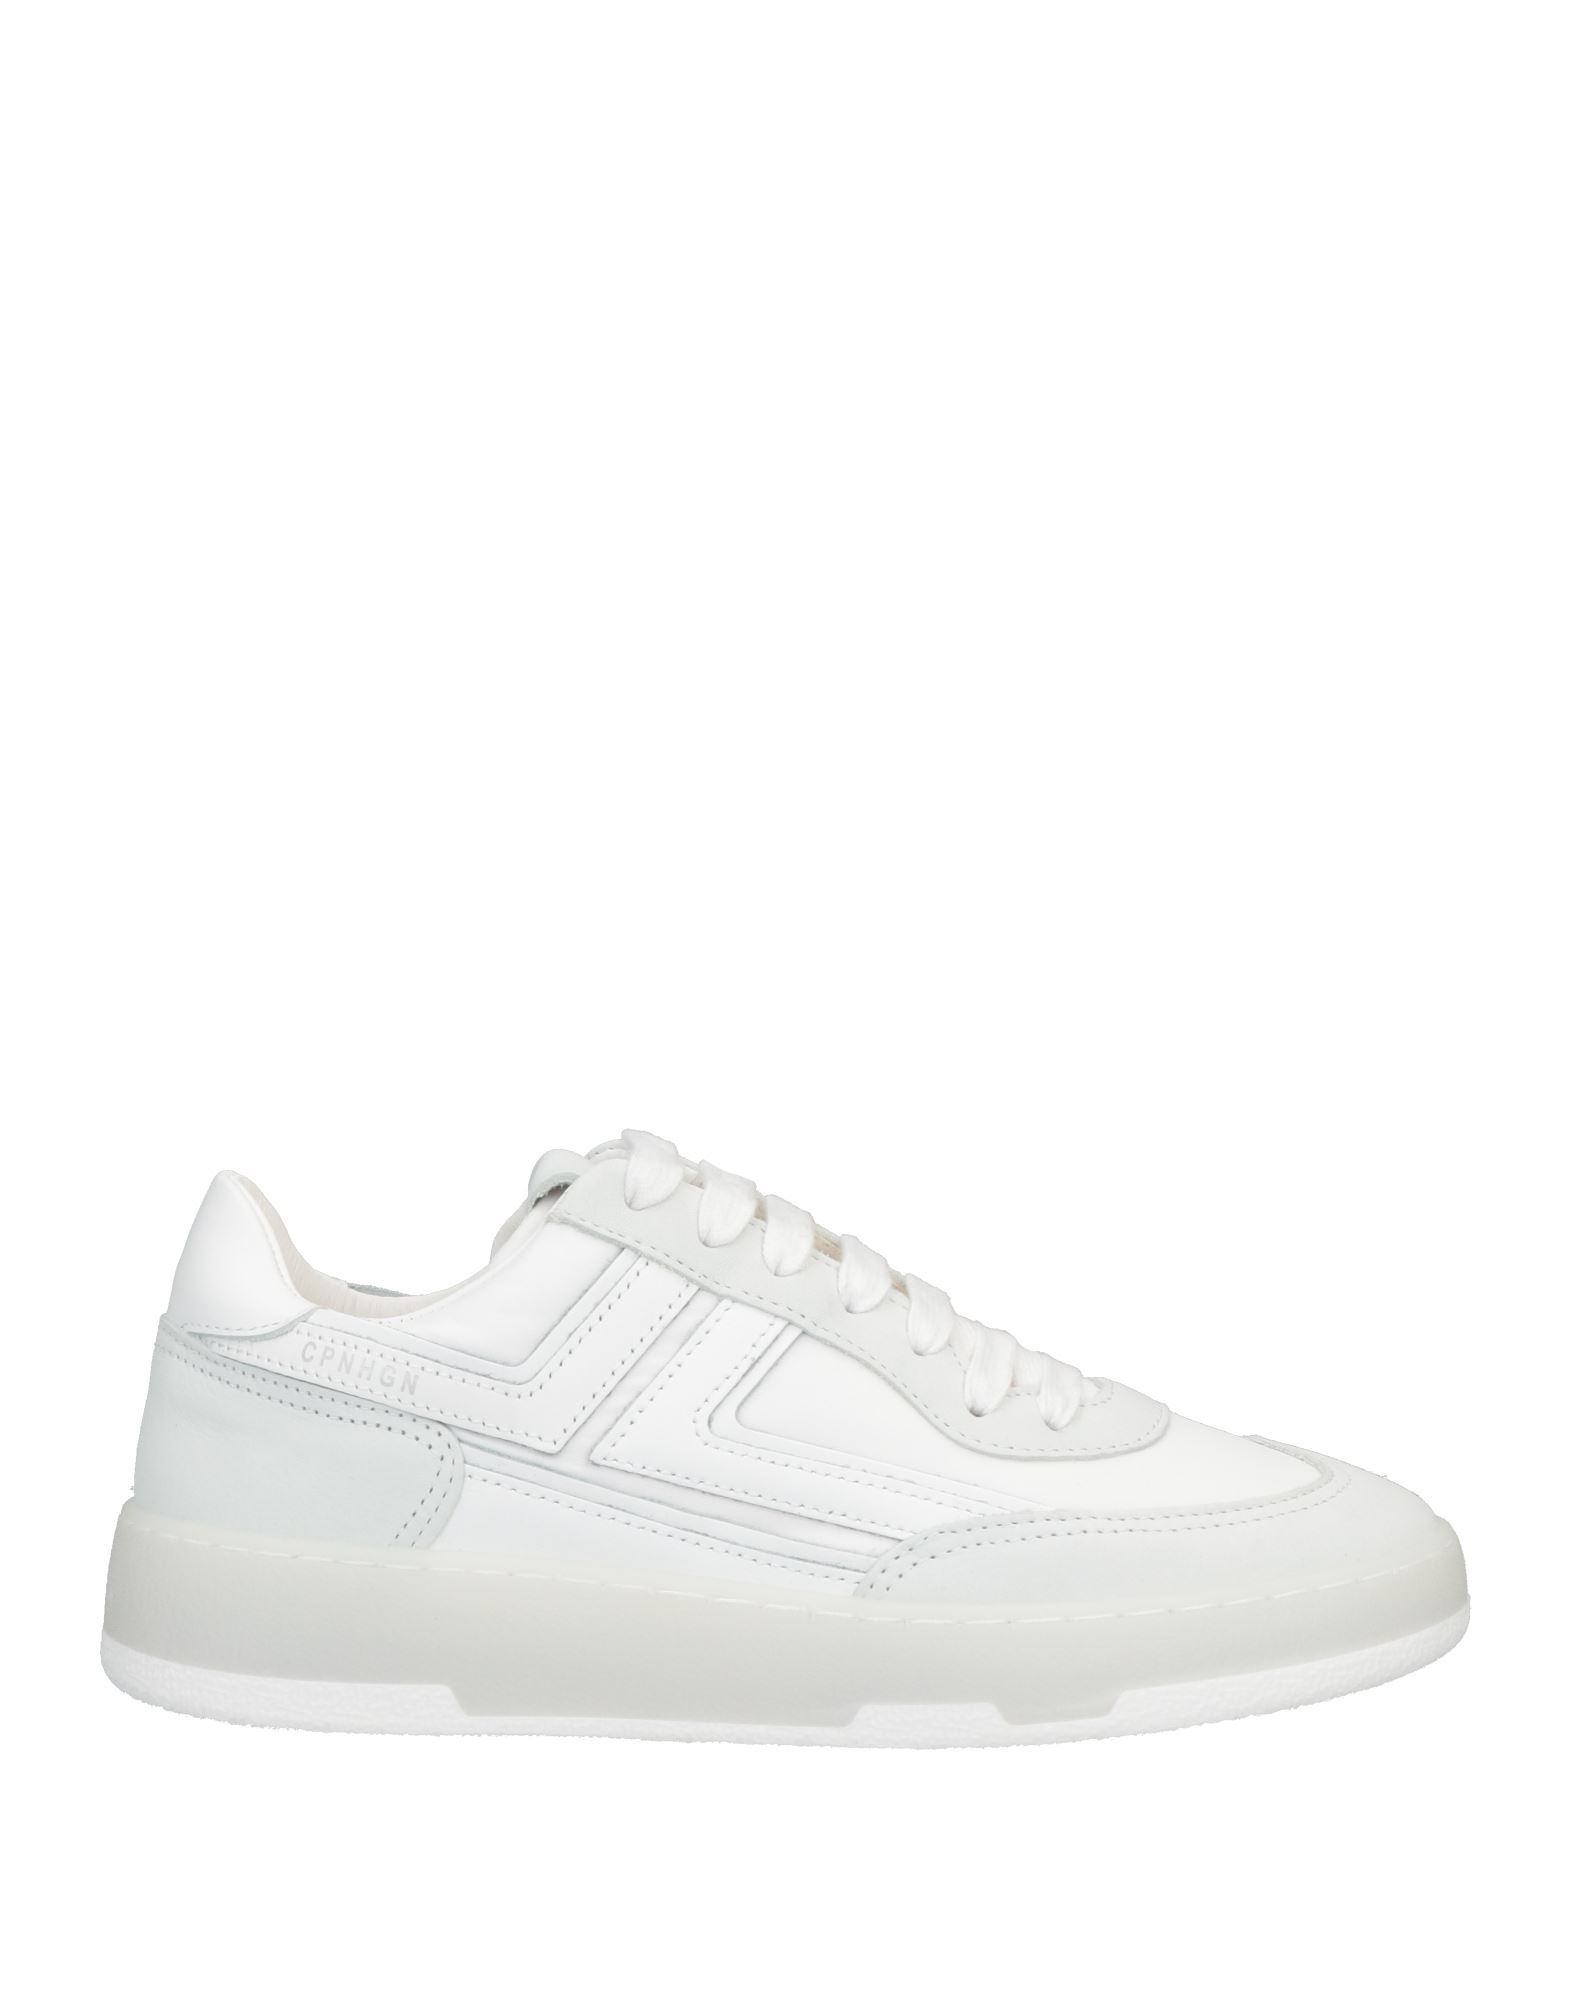 Copenhagen Studio Sneakers White Cph332 Leather